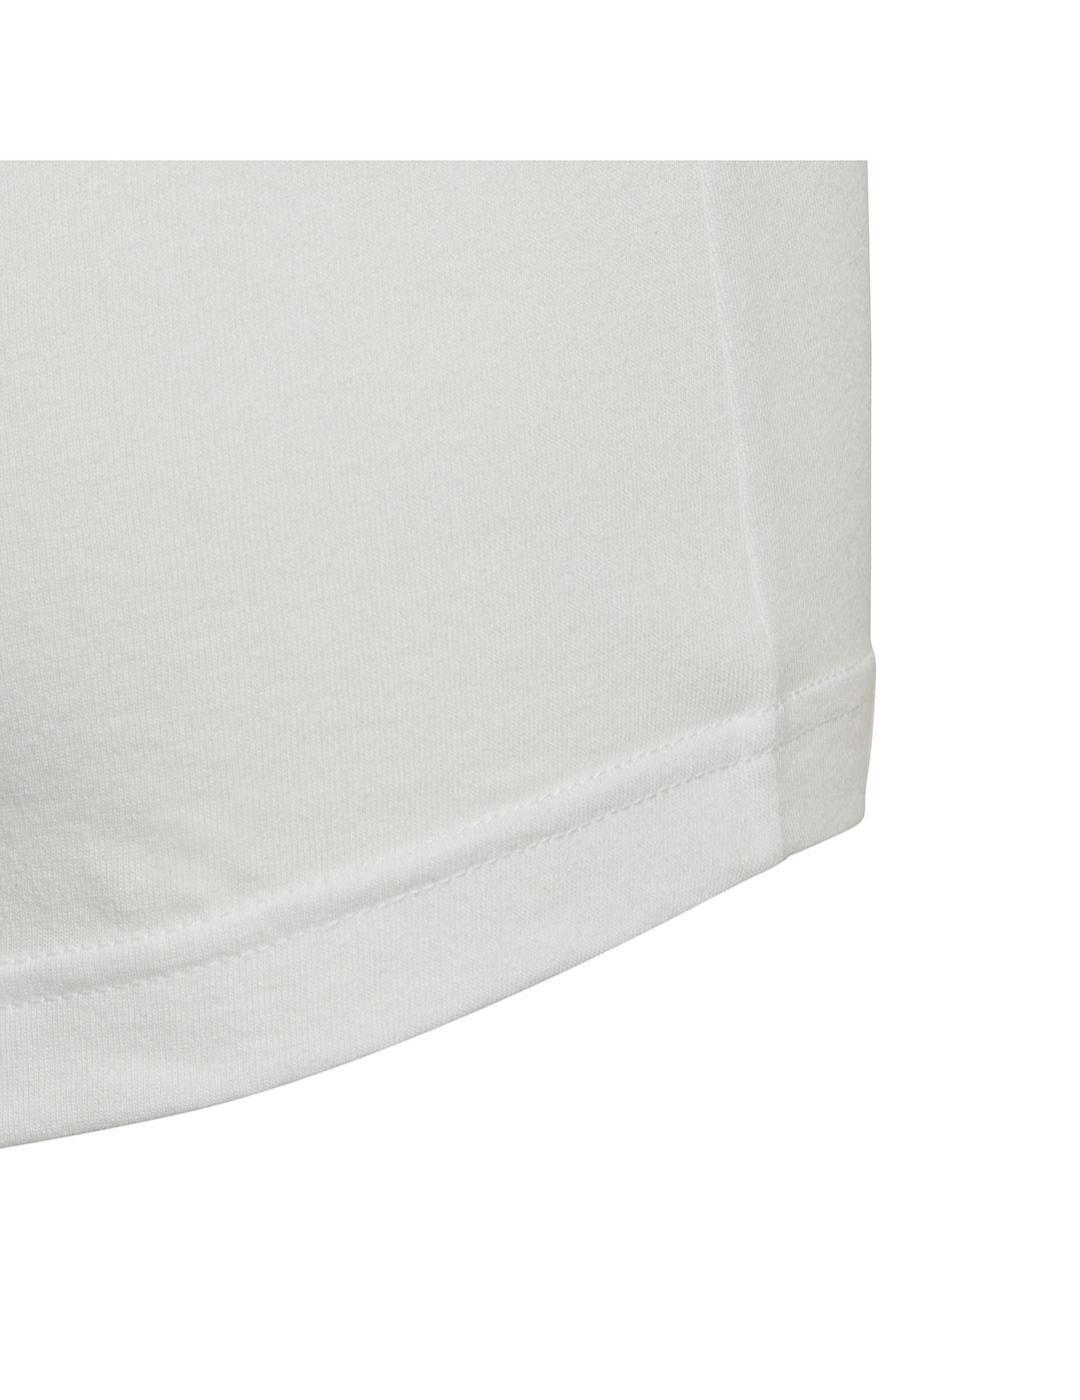 Camiseta Niña adidas Ox Blanca